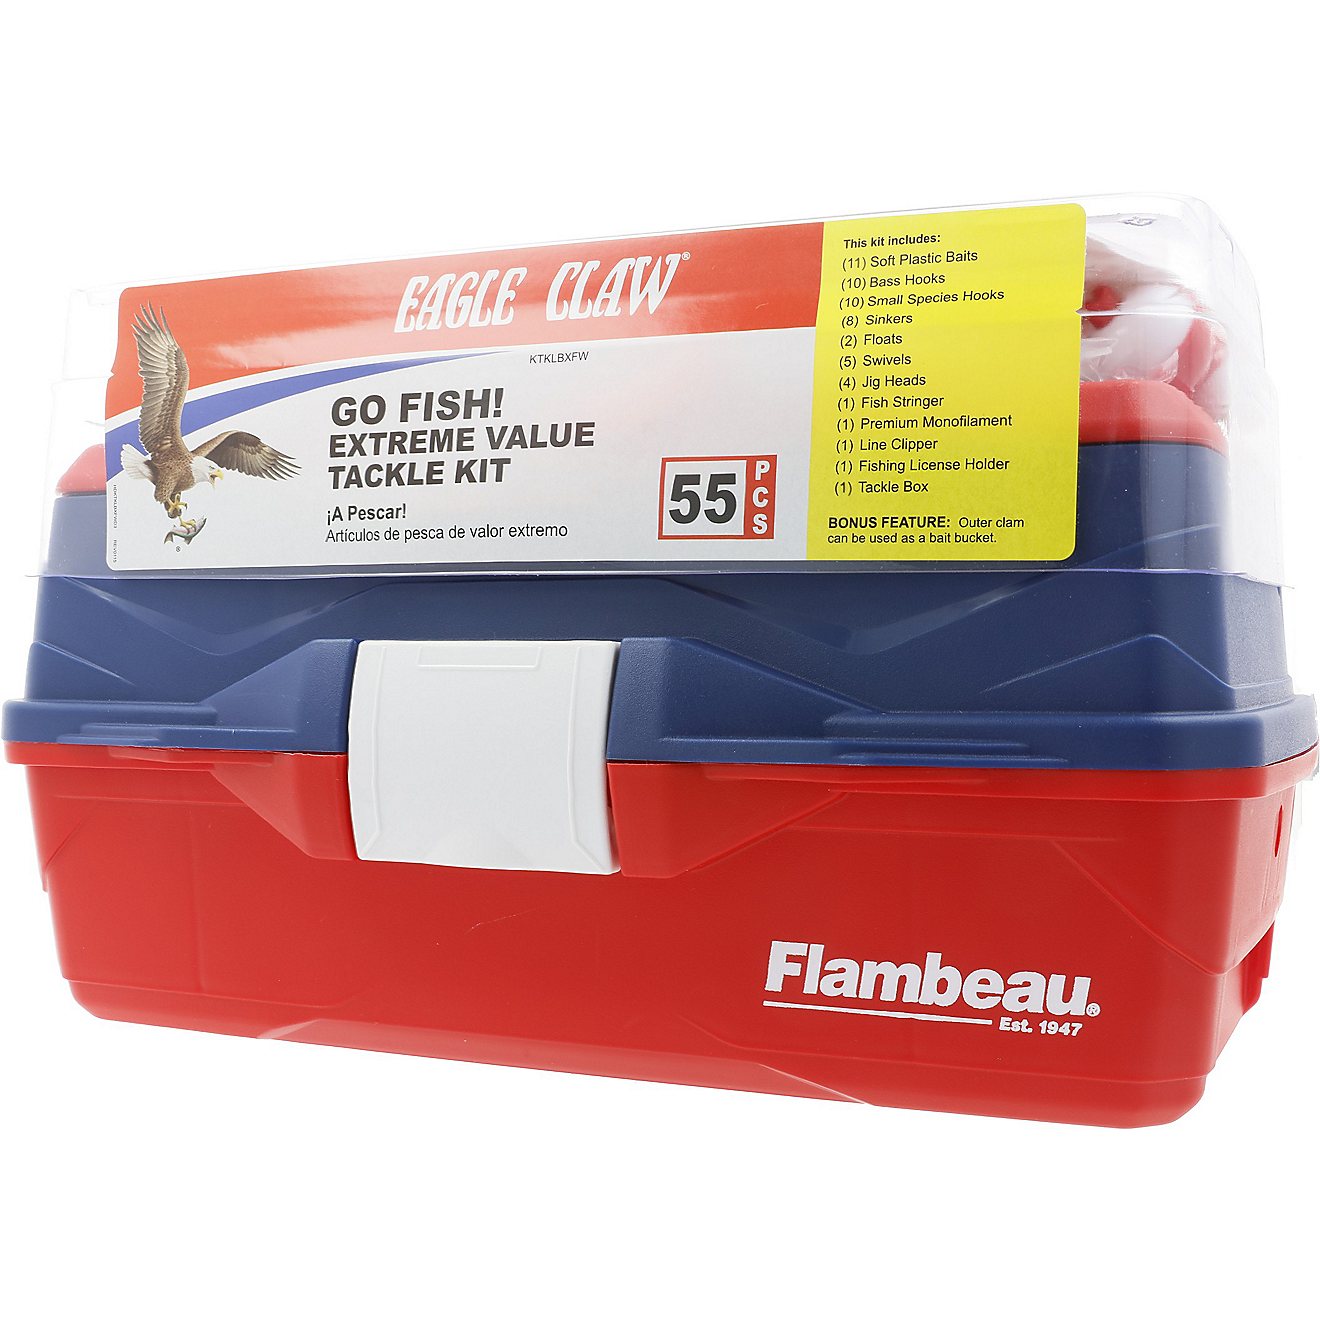 Eagle Claw Go Fish 55 Piece Tackle Box